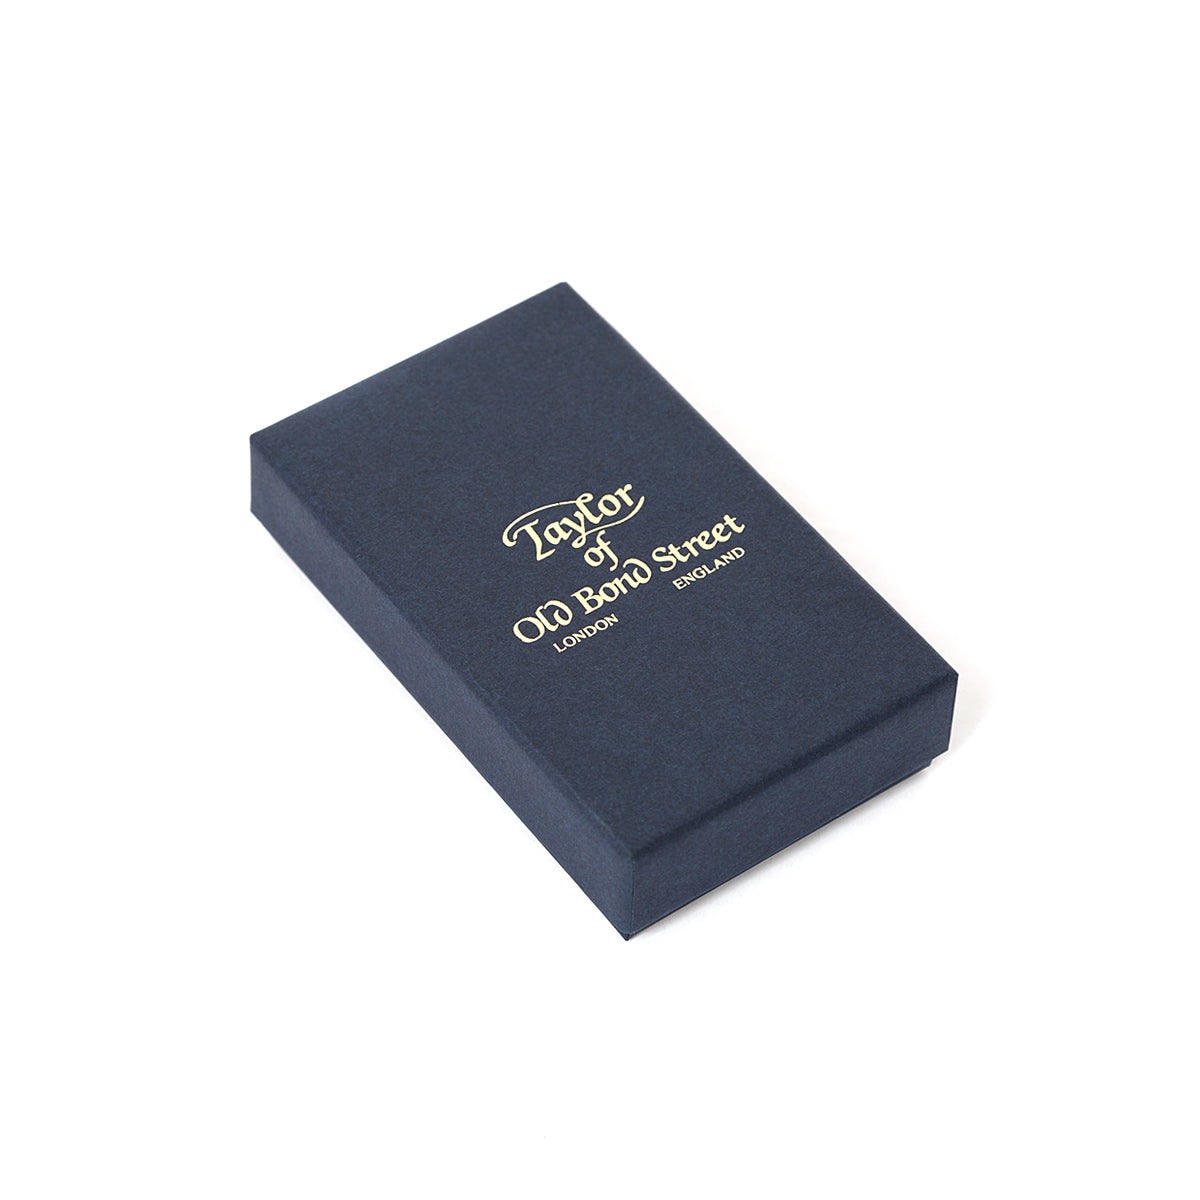 Taylor of Old Bond Street Black Leather Manicure Set Gift Box